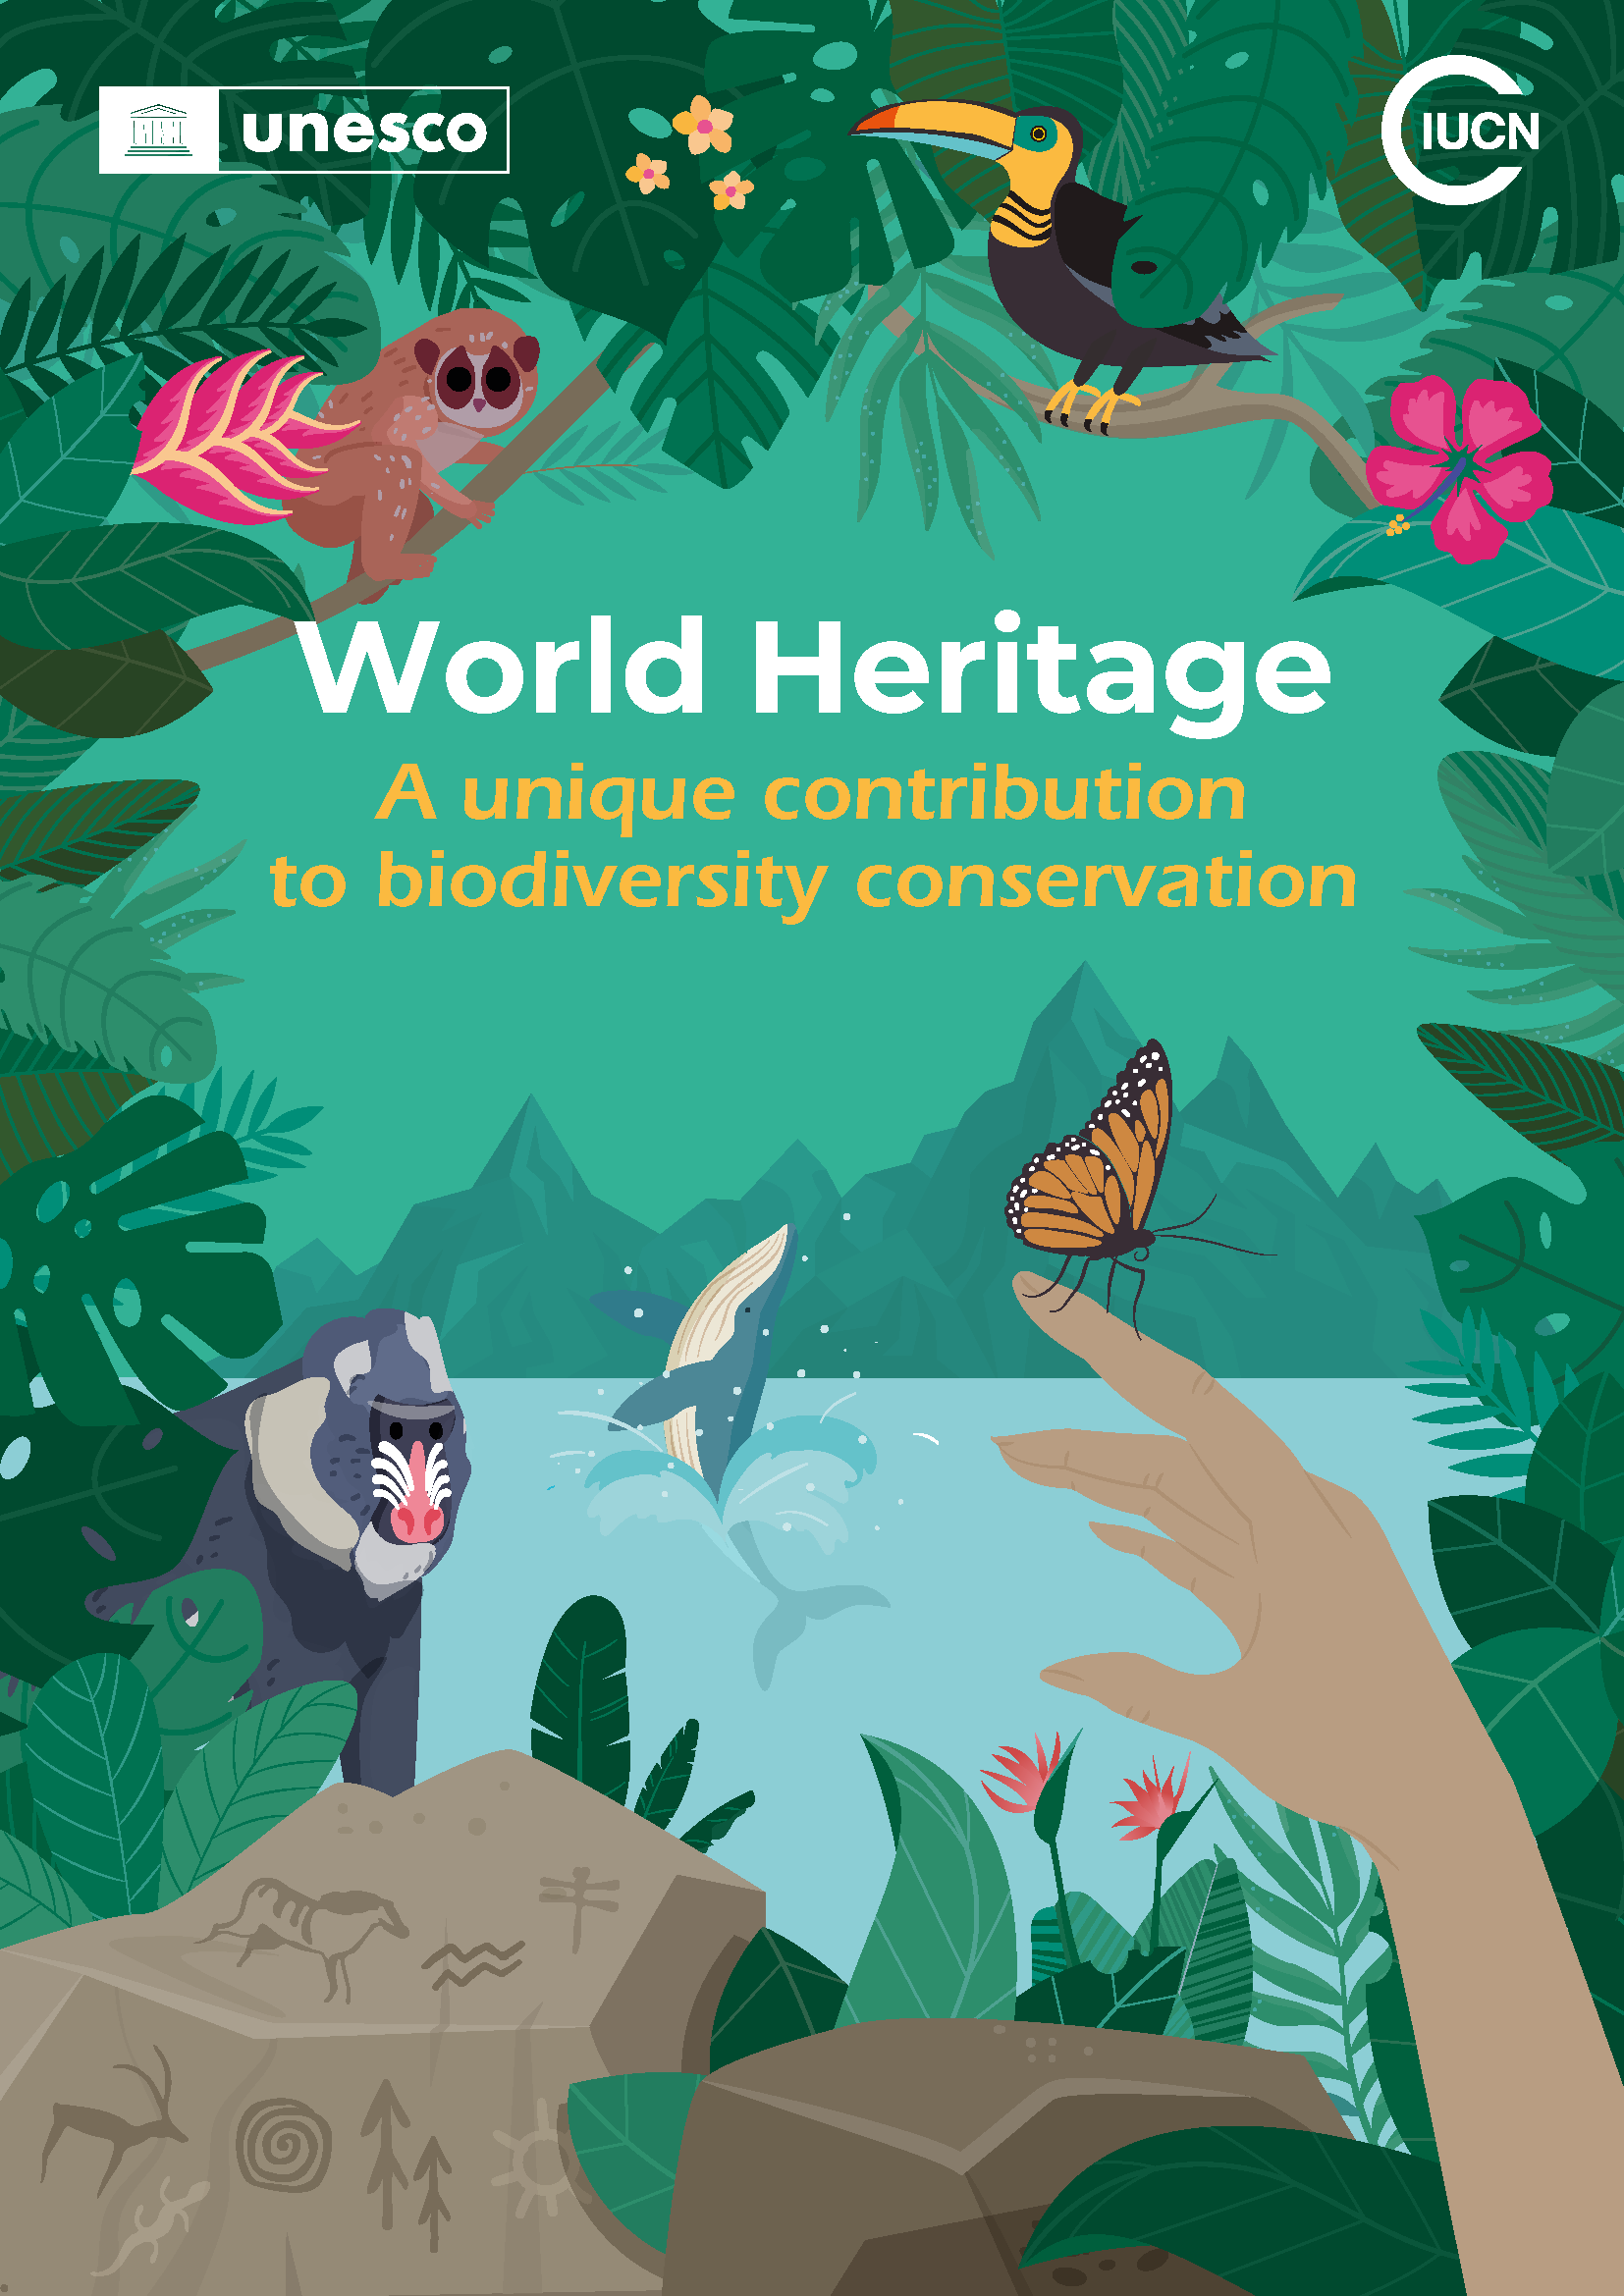 World Heritage: a unique contribution to biodiversity conservation. UNESCO, 2023. CC-BY-SA 3.0 IGO